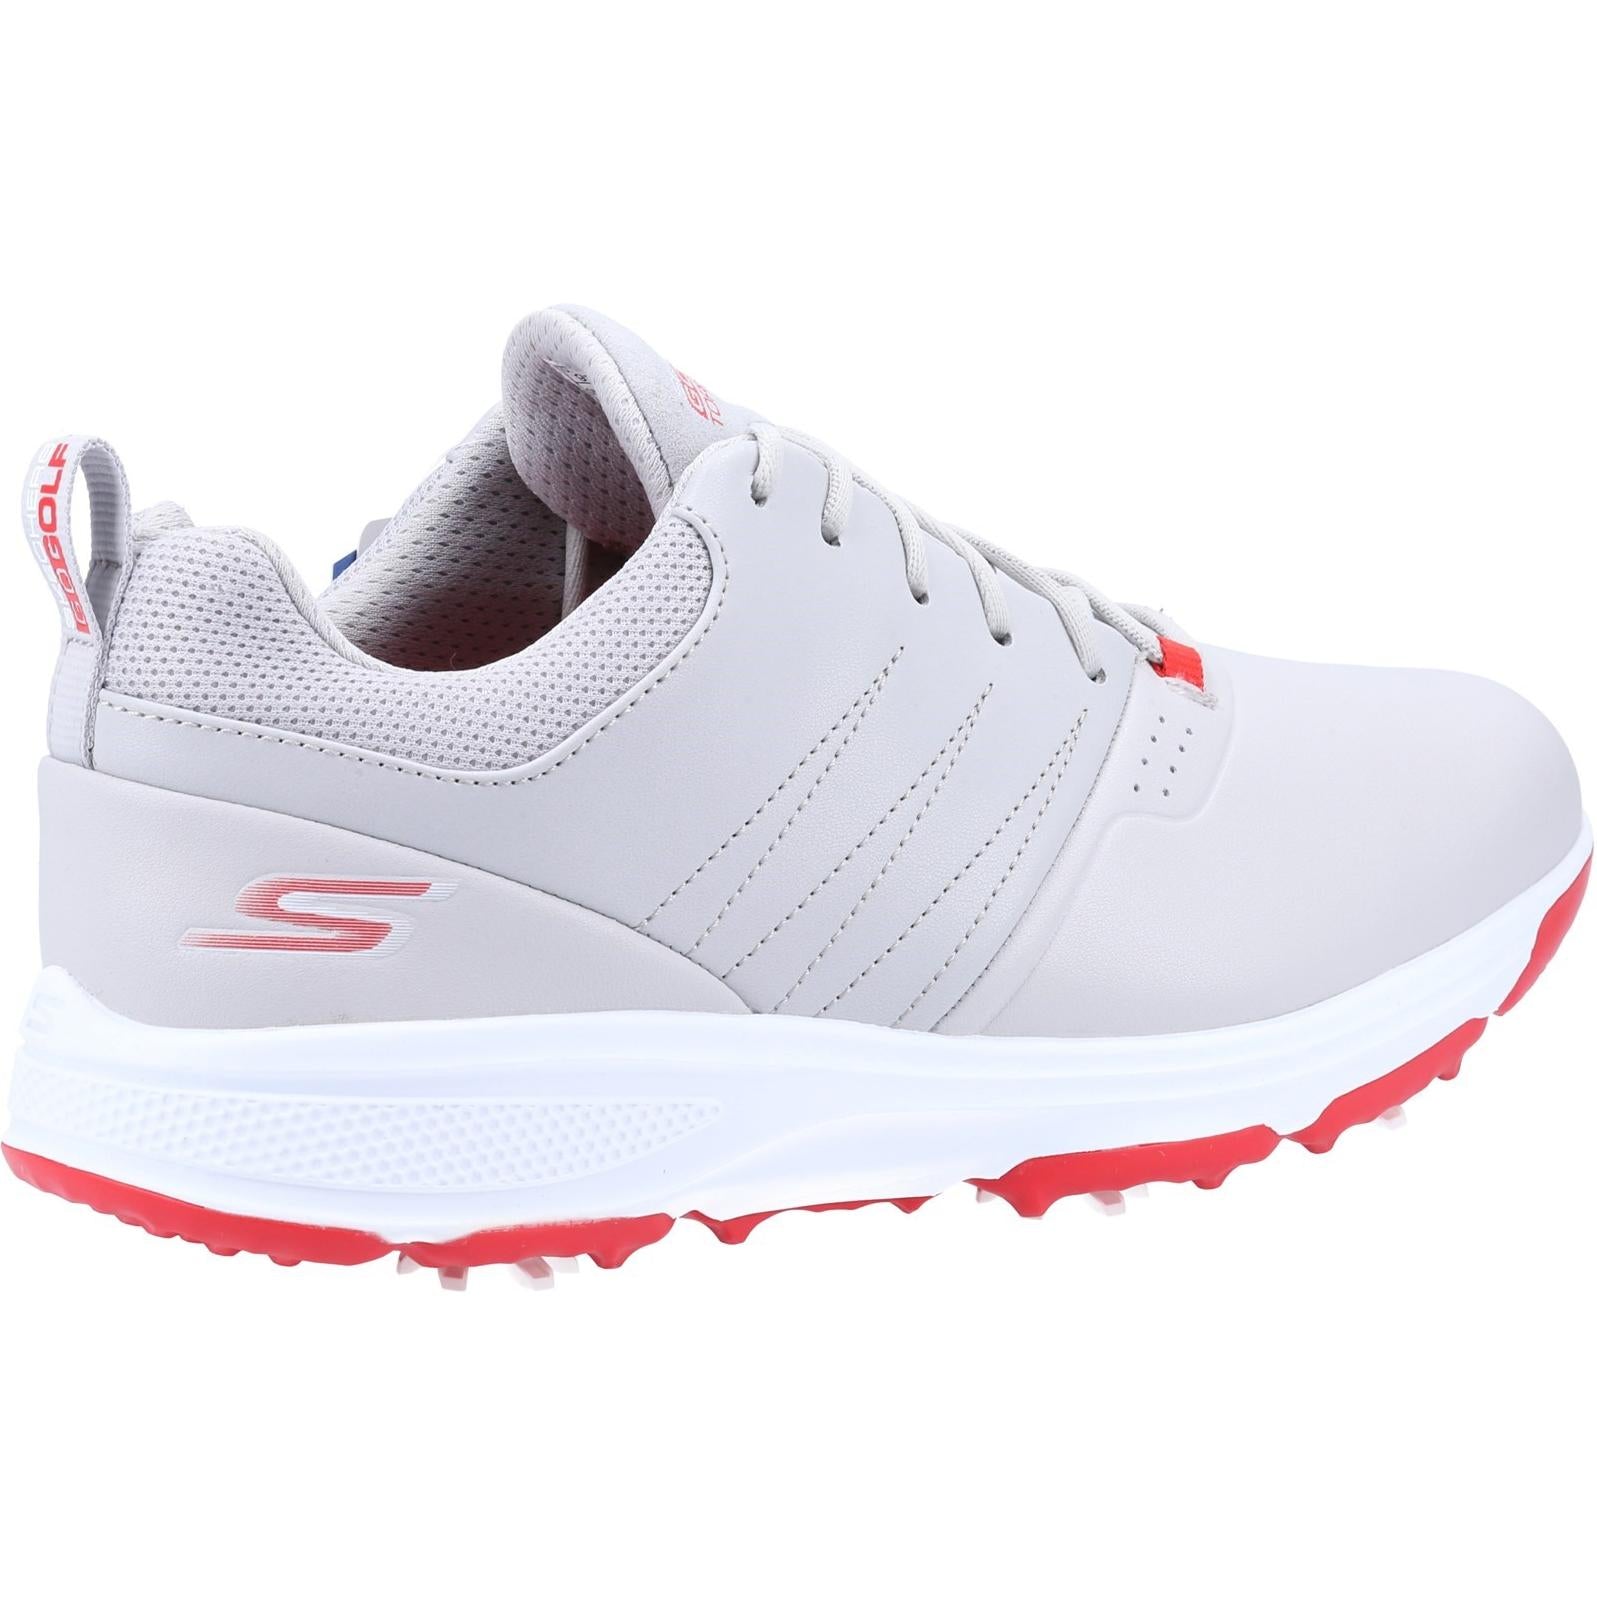 Skechers Go Golf Torque Pro Sports Shoes